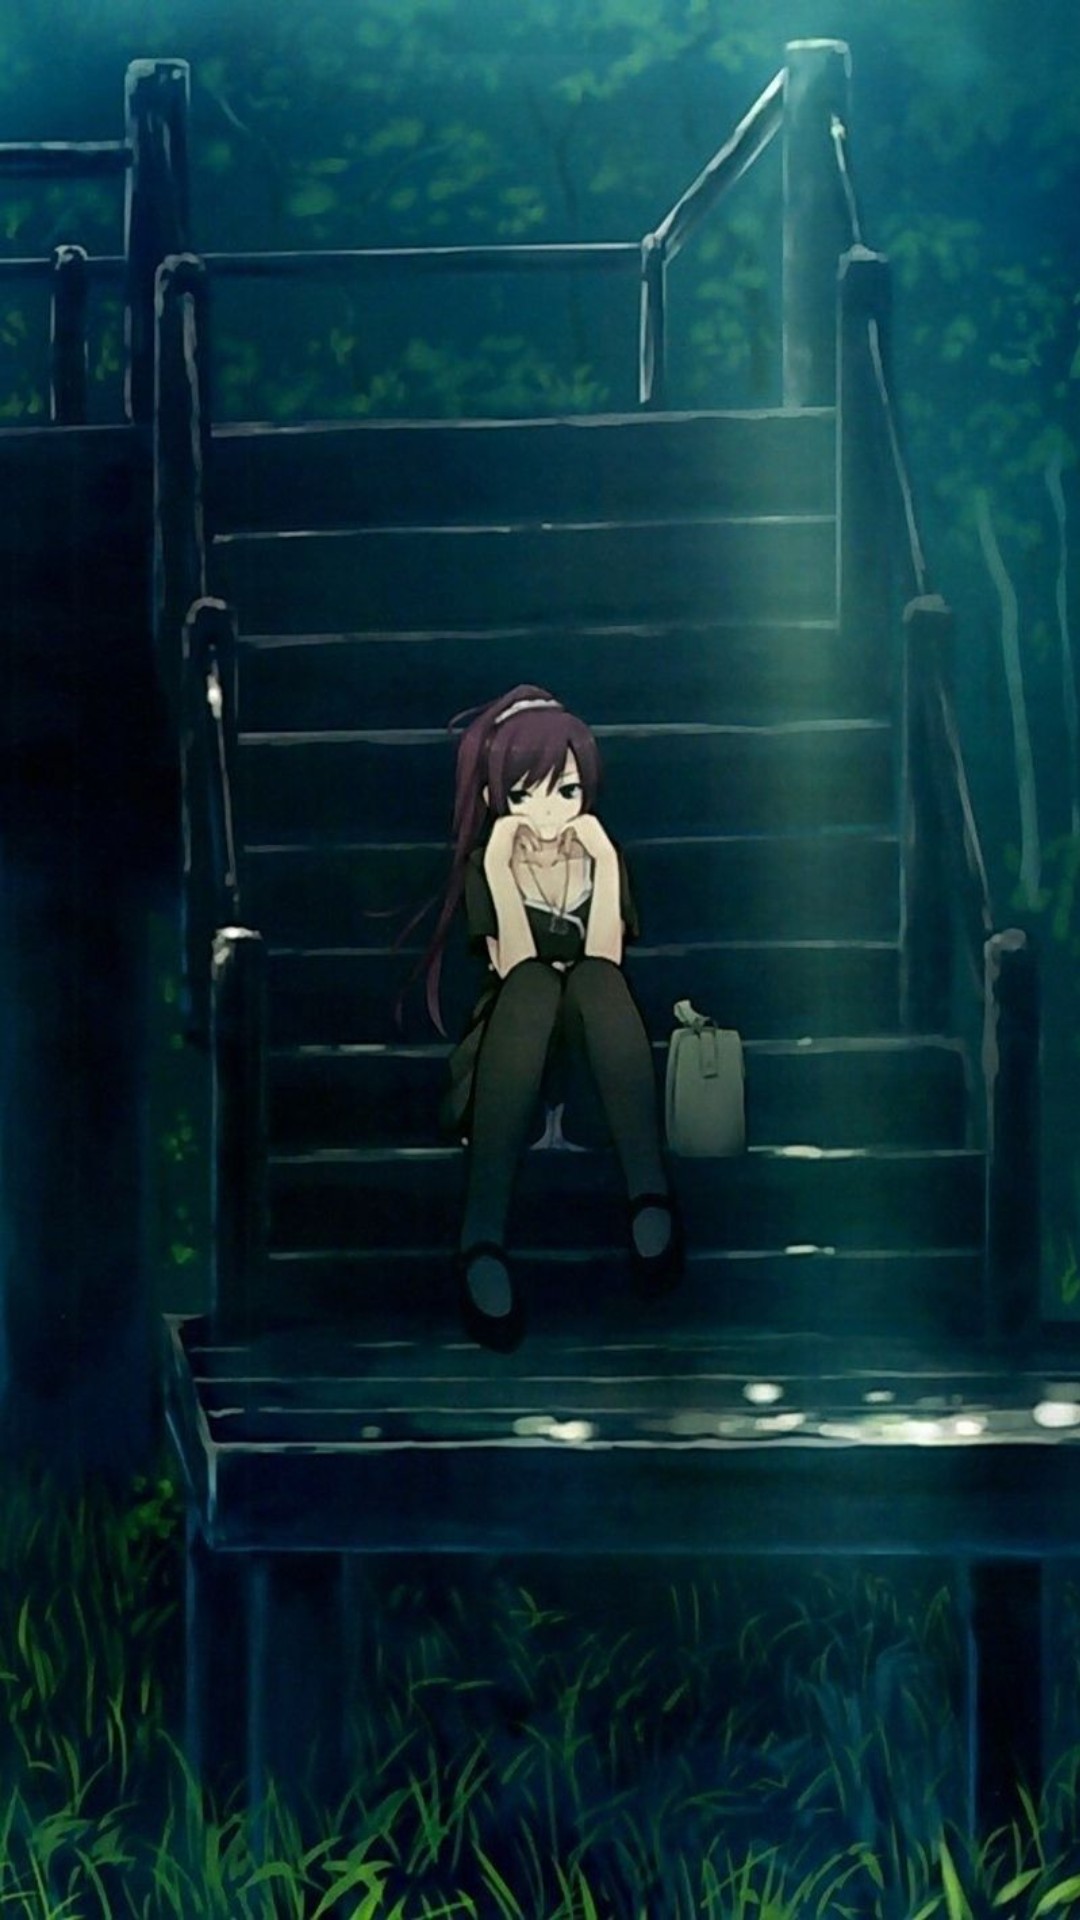 Anime Depressed Girls Wallpapers